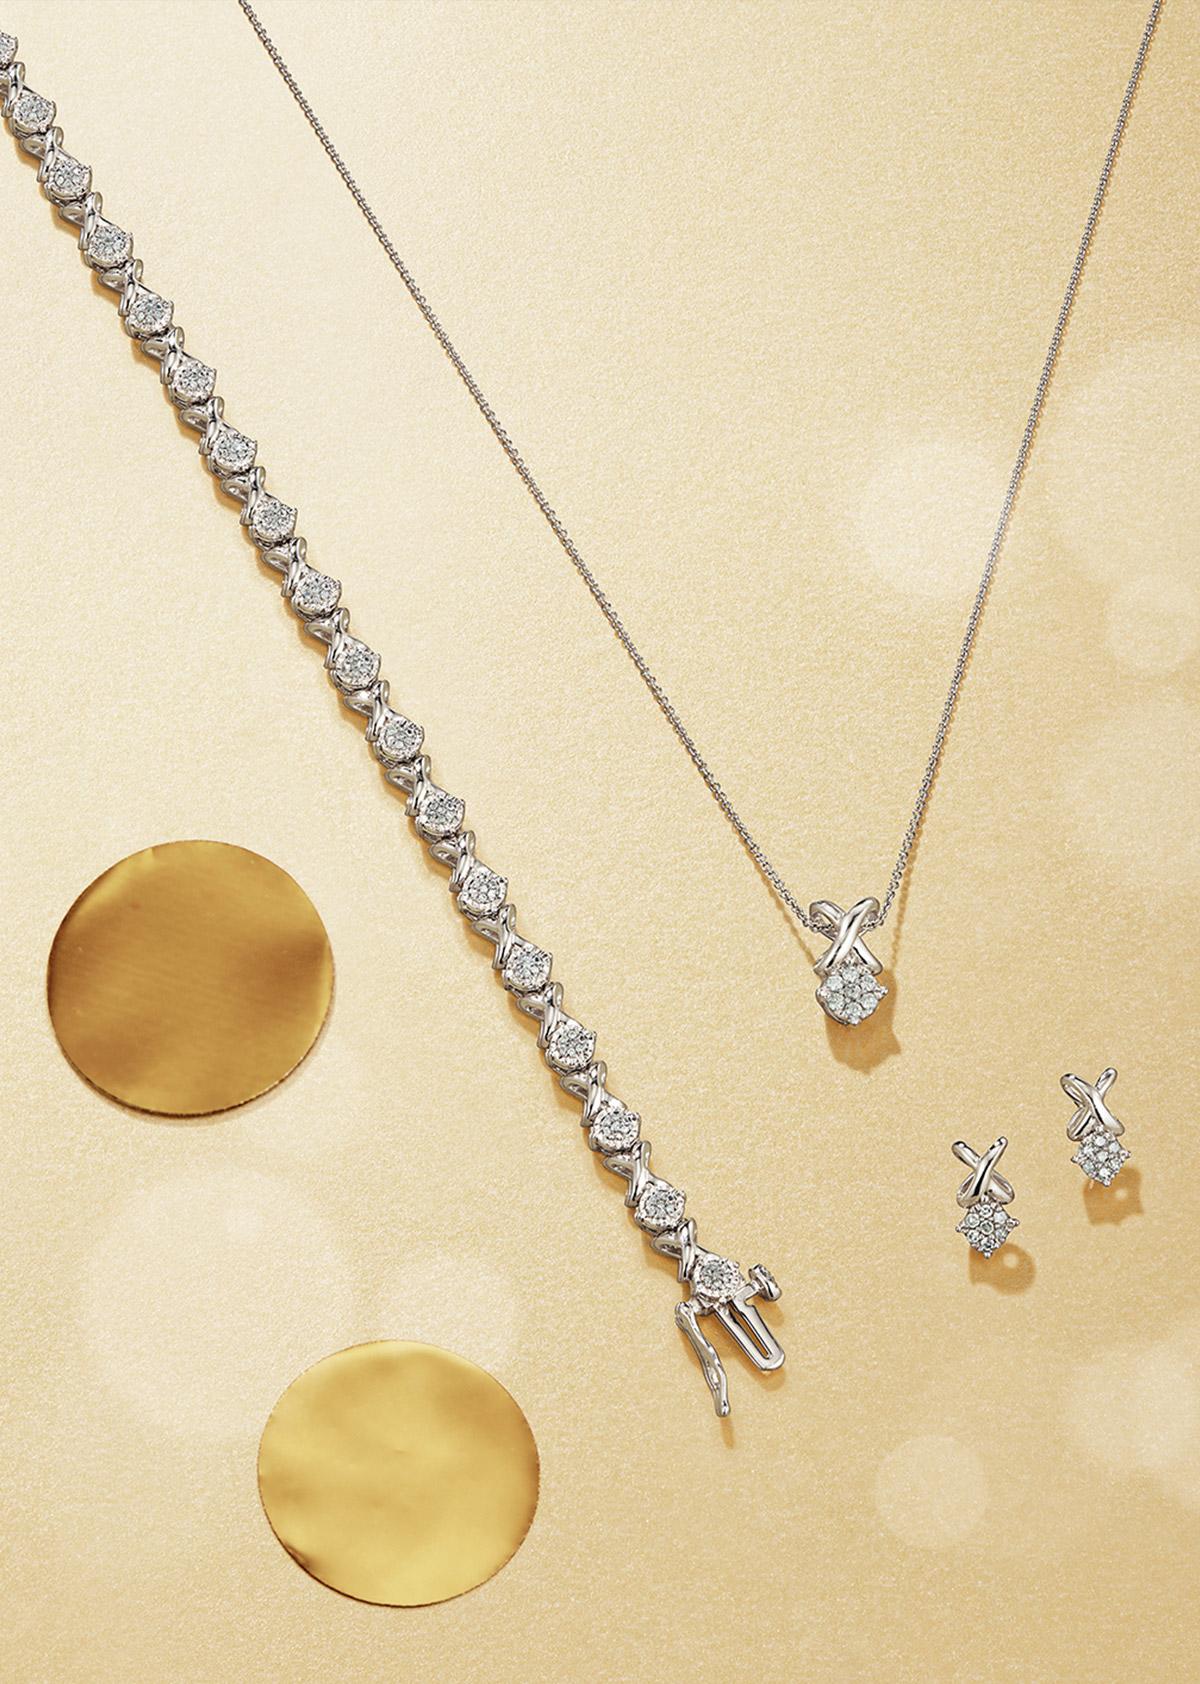 Diamond tennis bracelet, diamond pendant and earrings